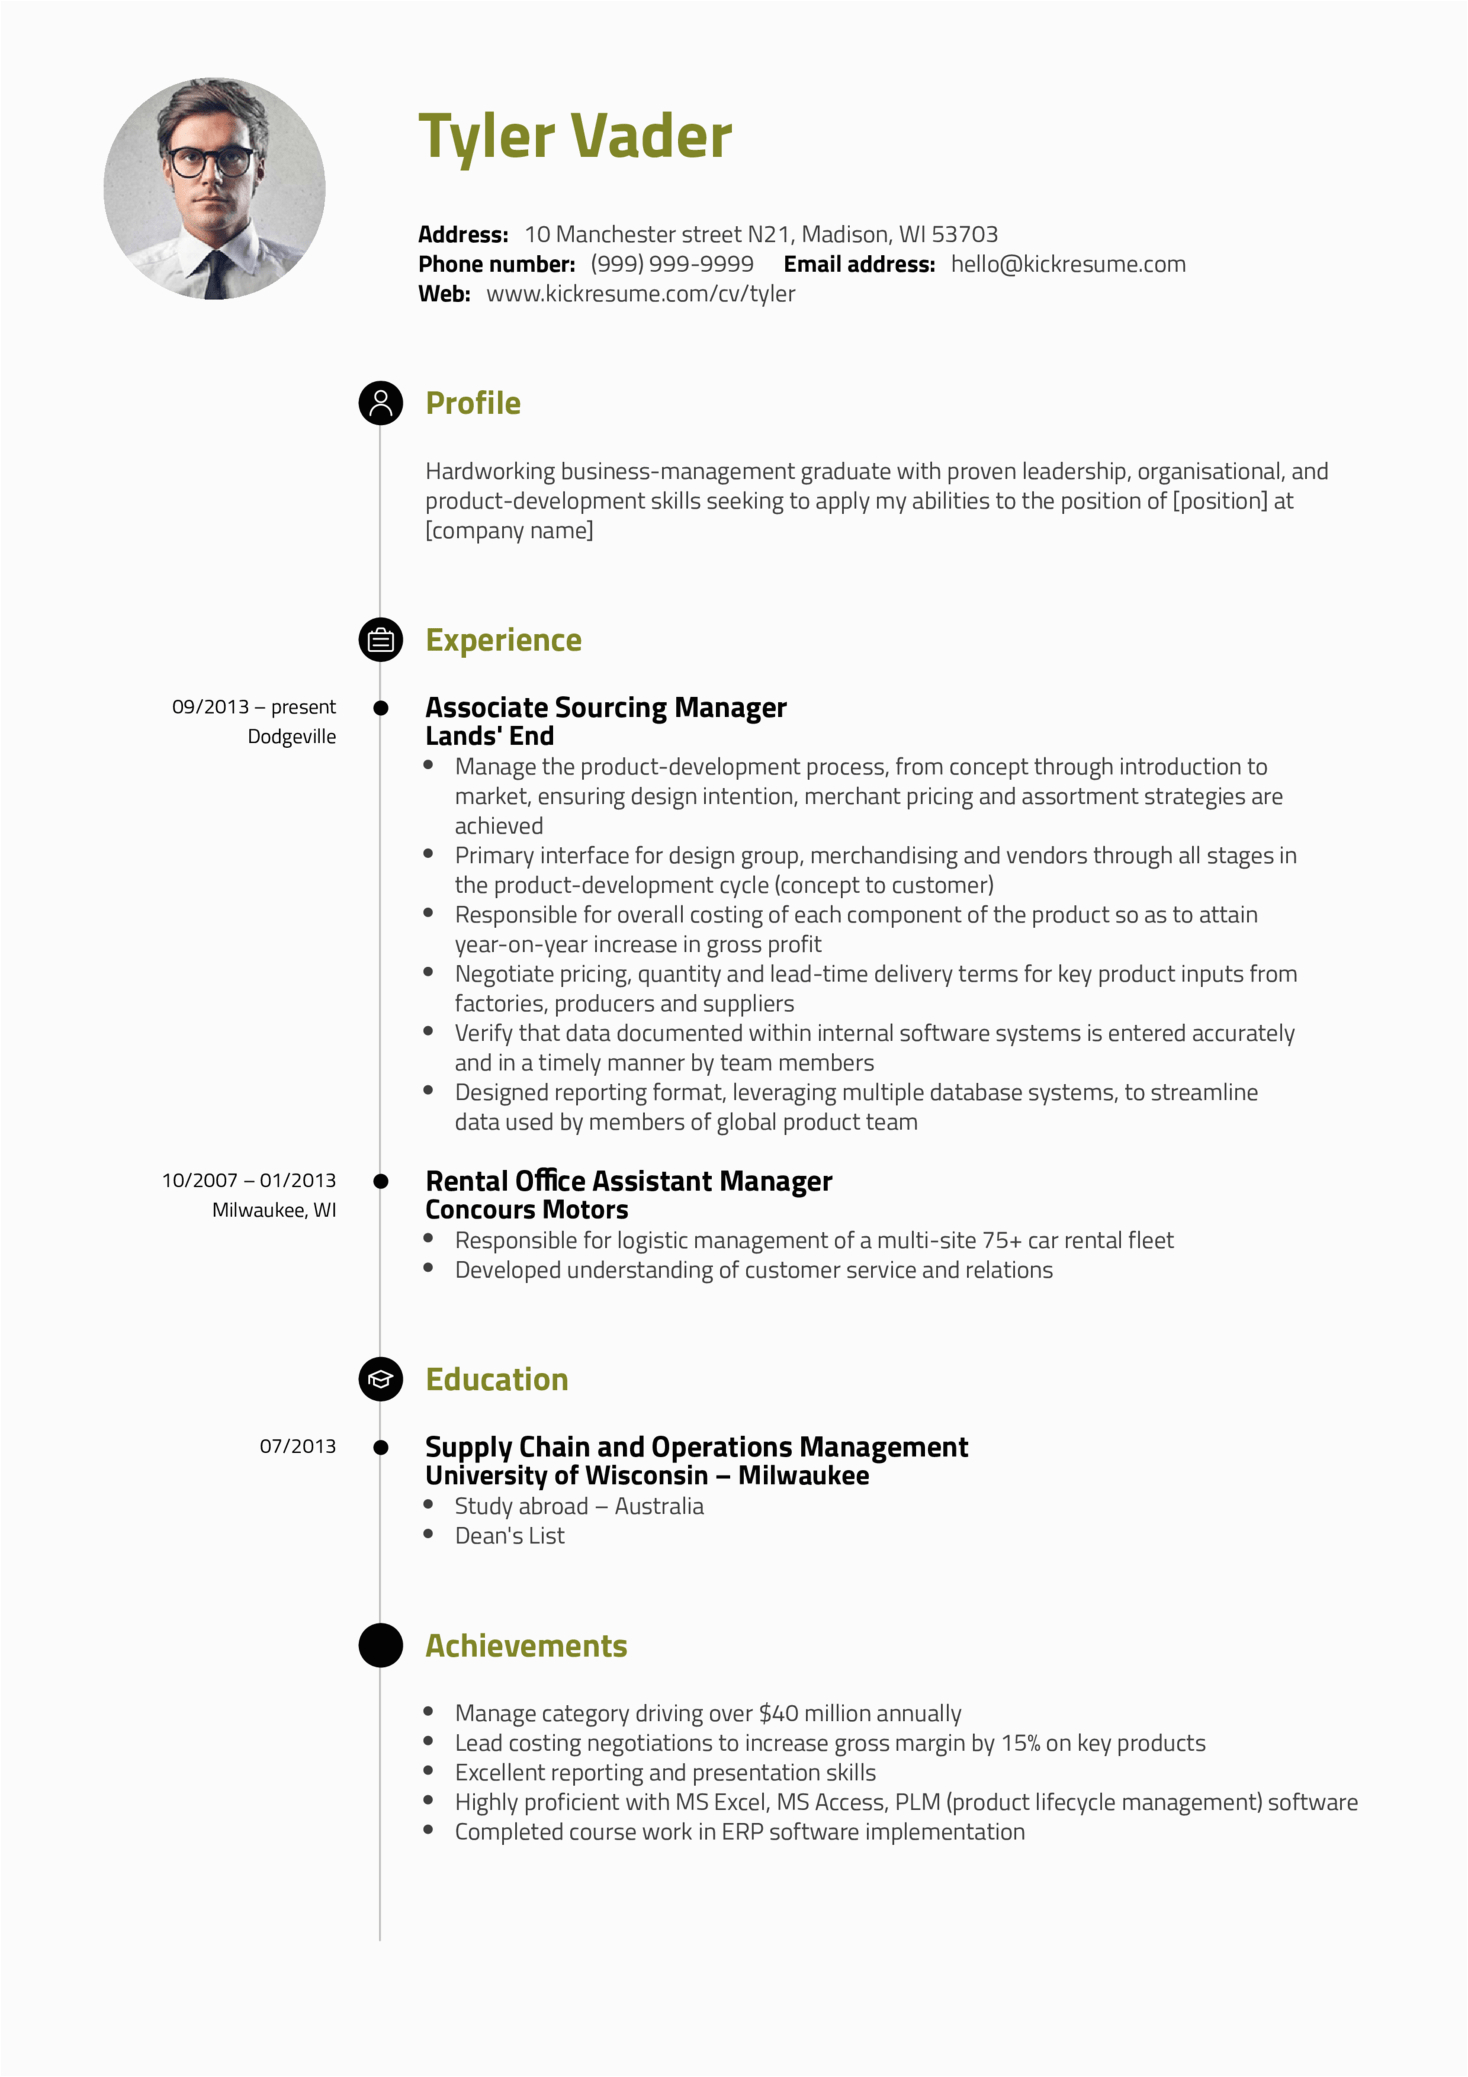 Sample Resume for Business Management Student Resume Examples by Real People Business Management